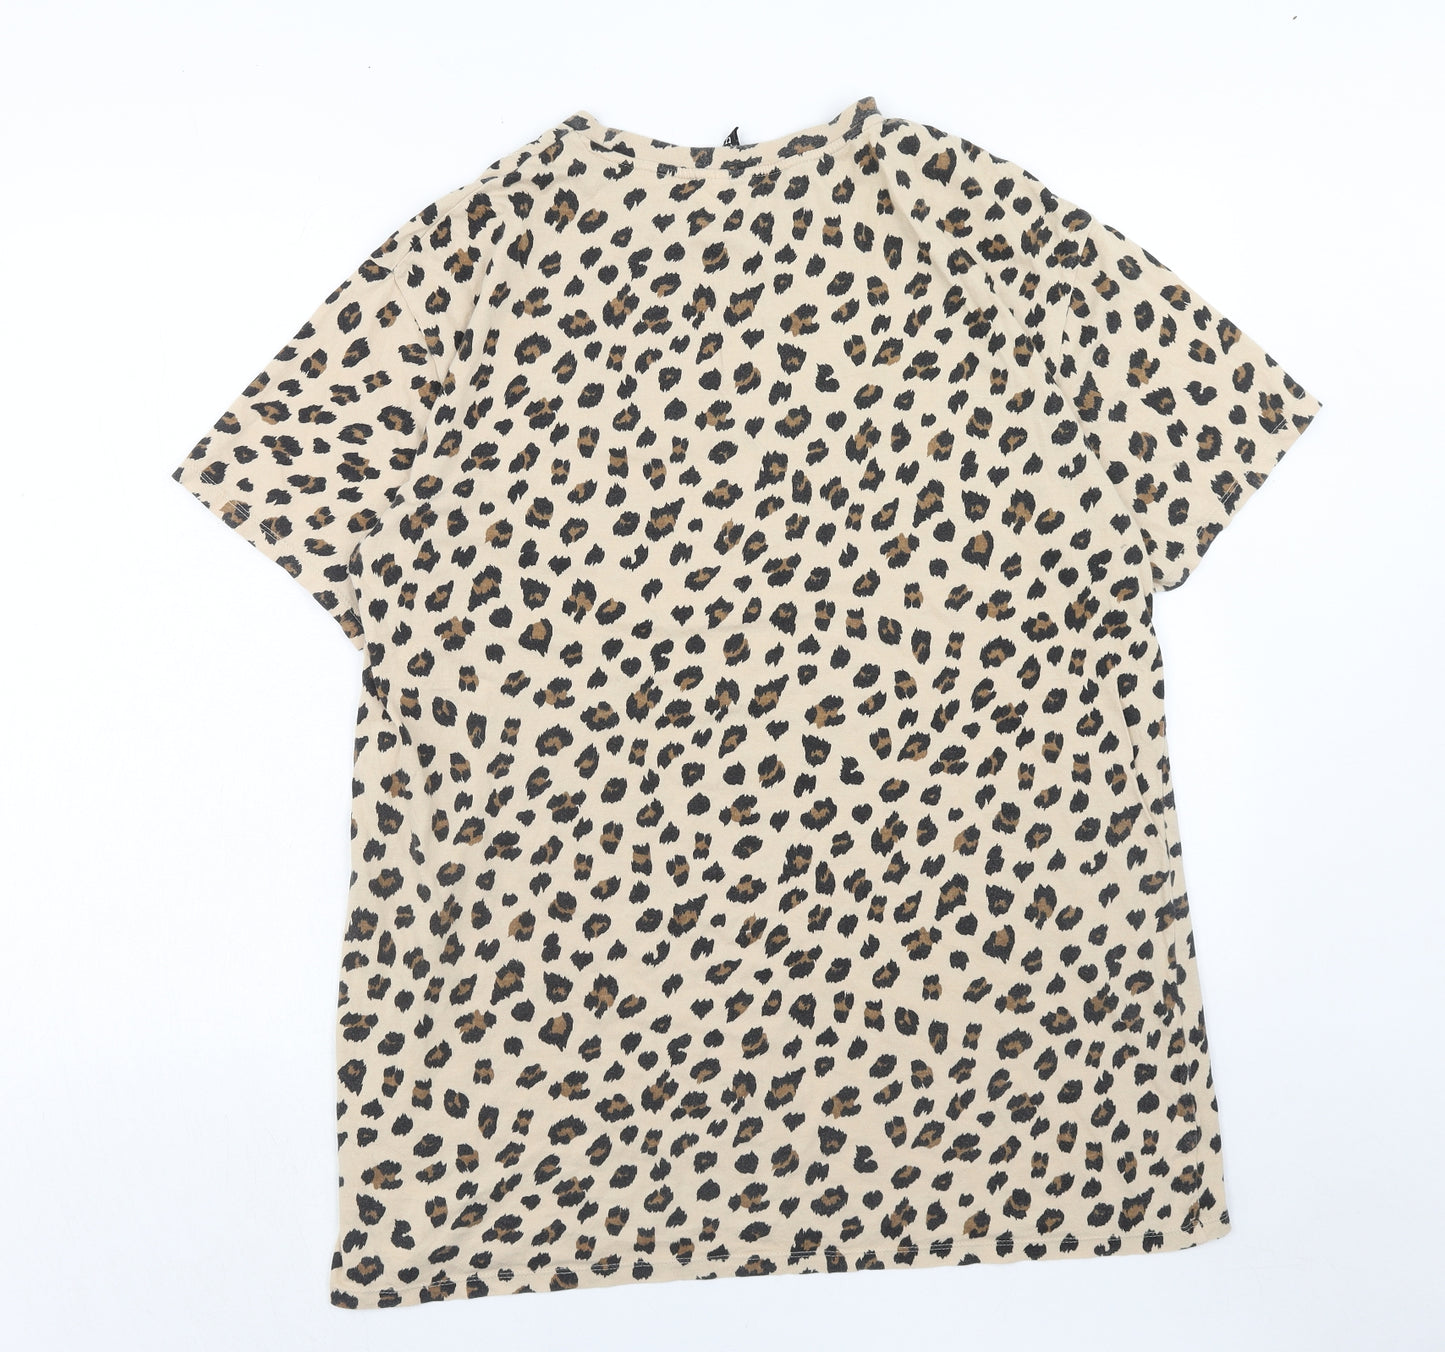 H&M Womens Brown Animal Print Cotton Basic T-Shirt Size 14 Round Neck - New York, Leopard Print